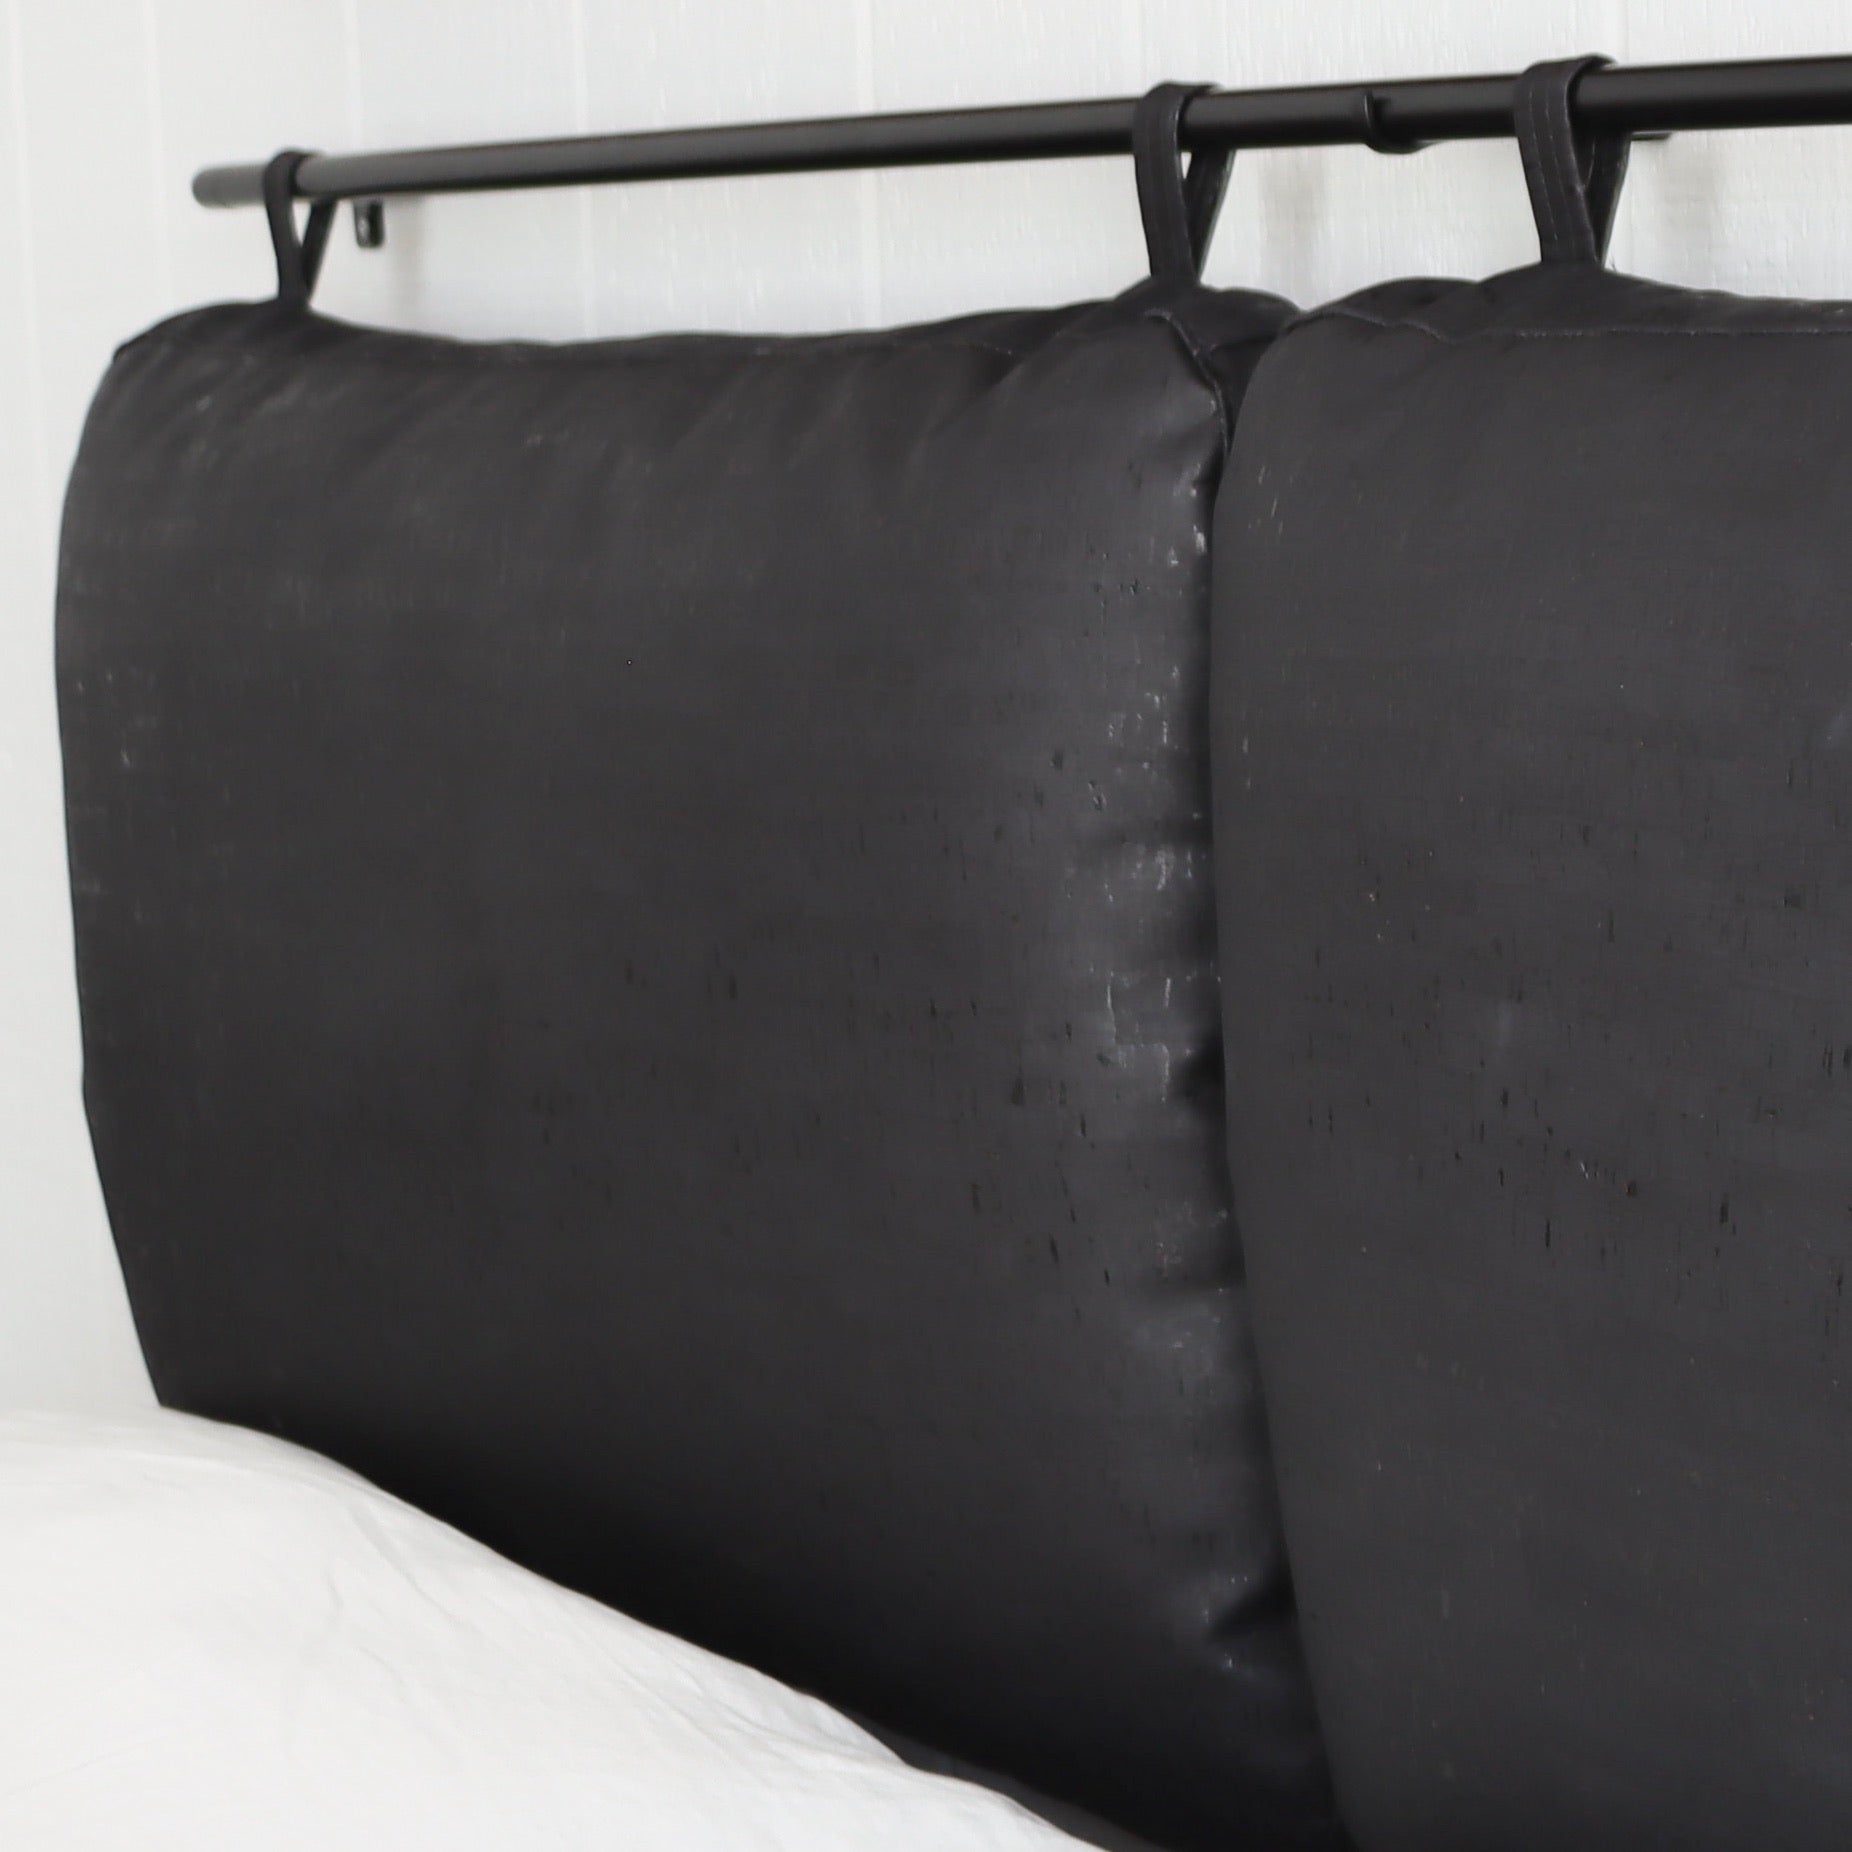 The Rachael Leather Headboard Cushion Set - Dark Amber